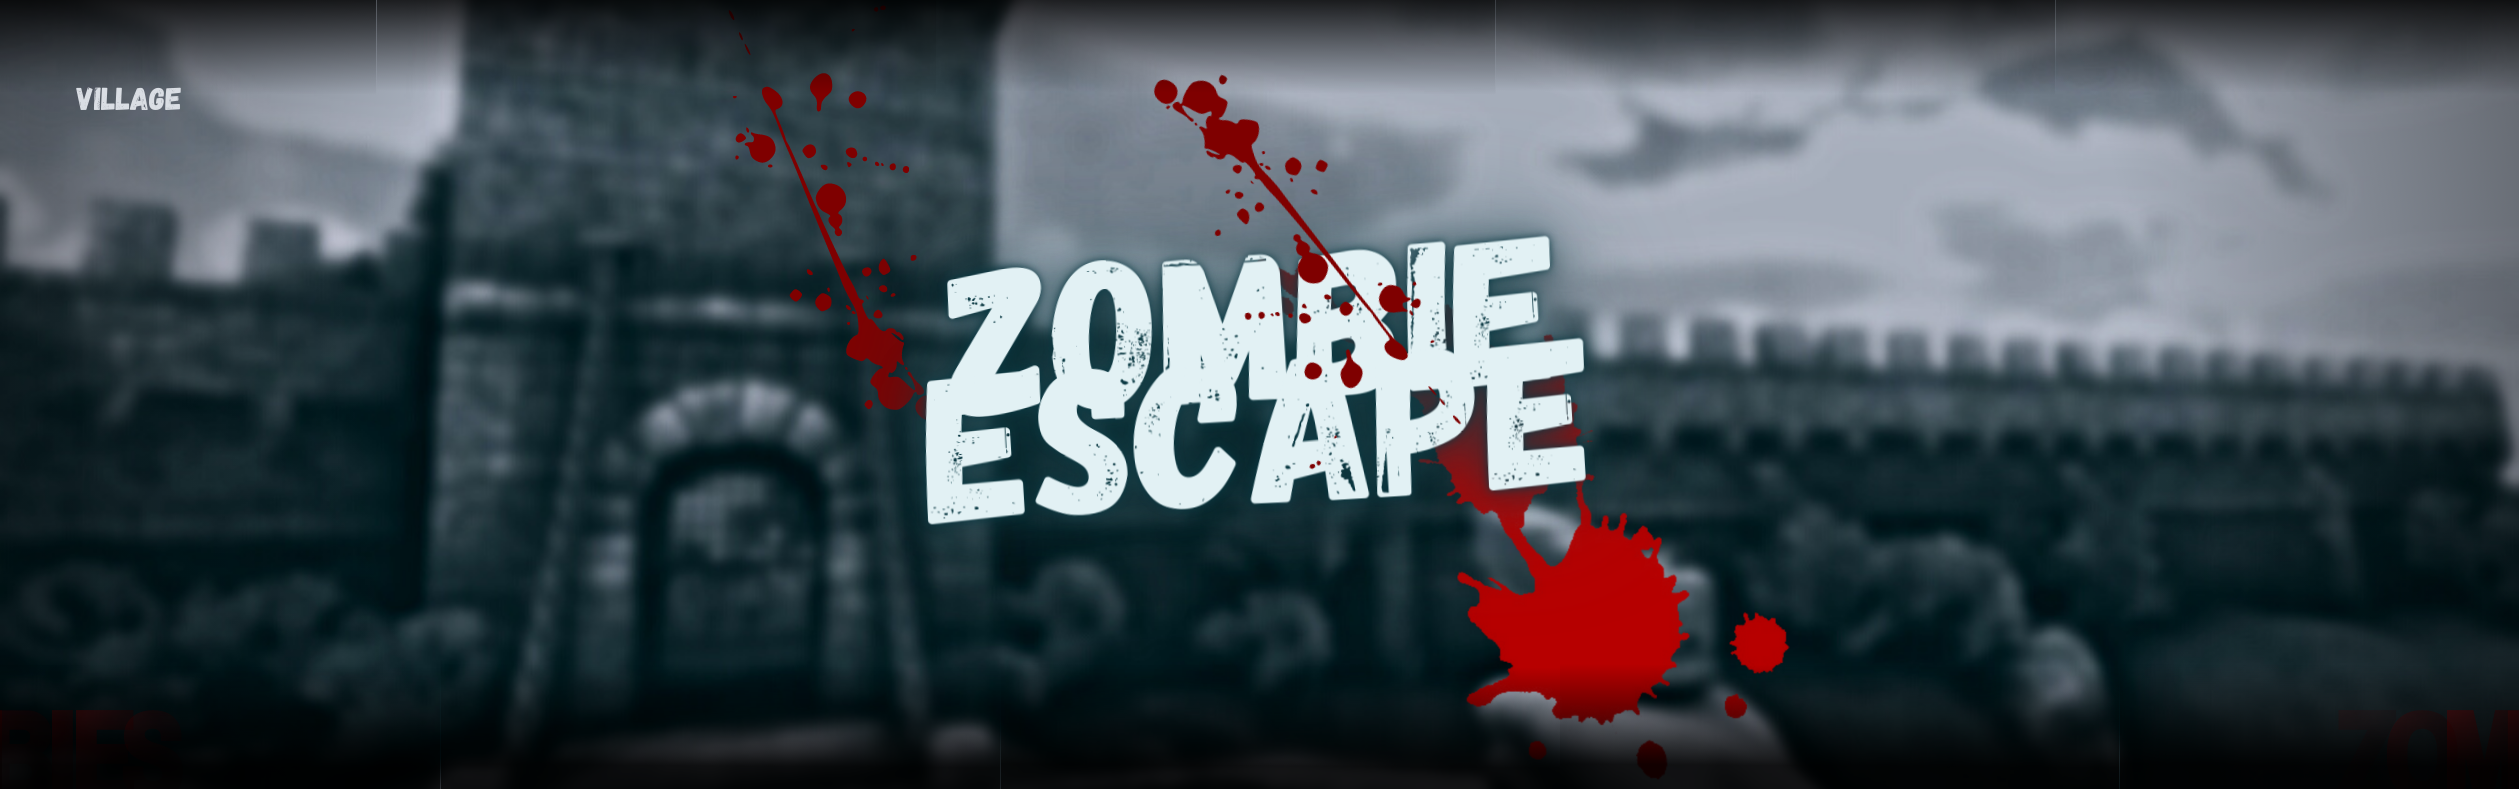 Zombie Escape - Village